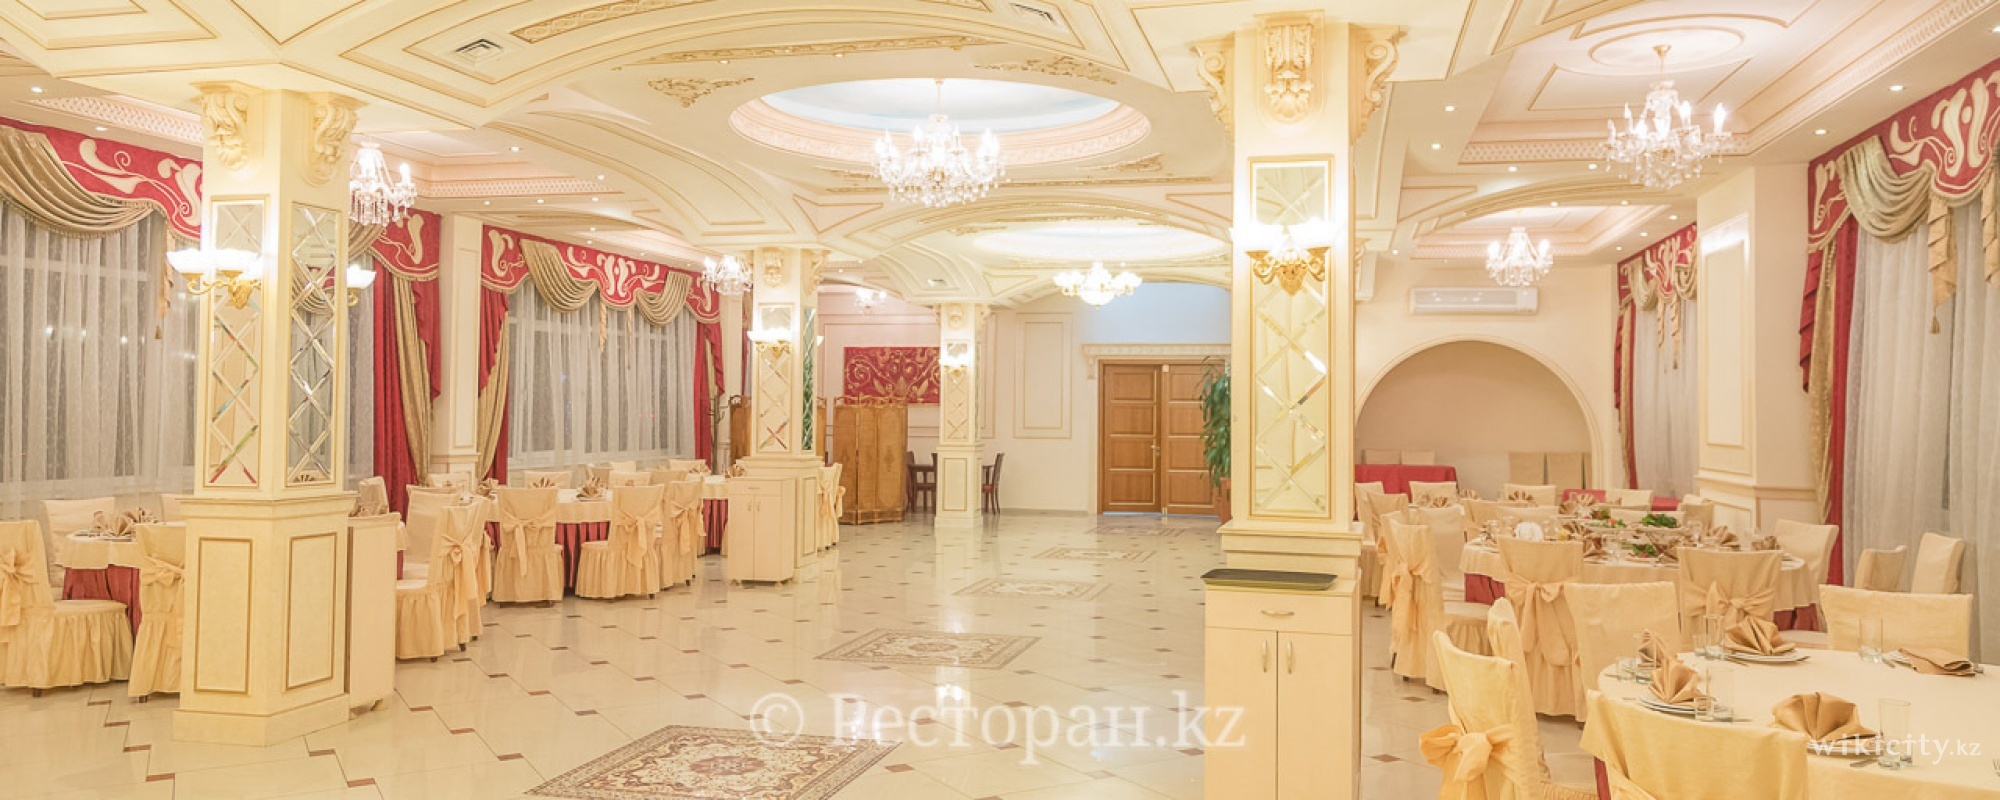 Фото Алтын Холл - Алматы. малый зал 130 гостей